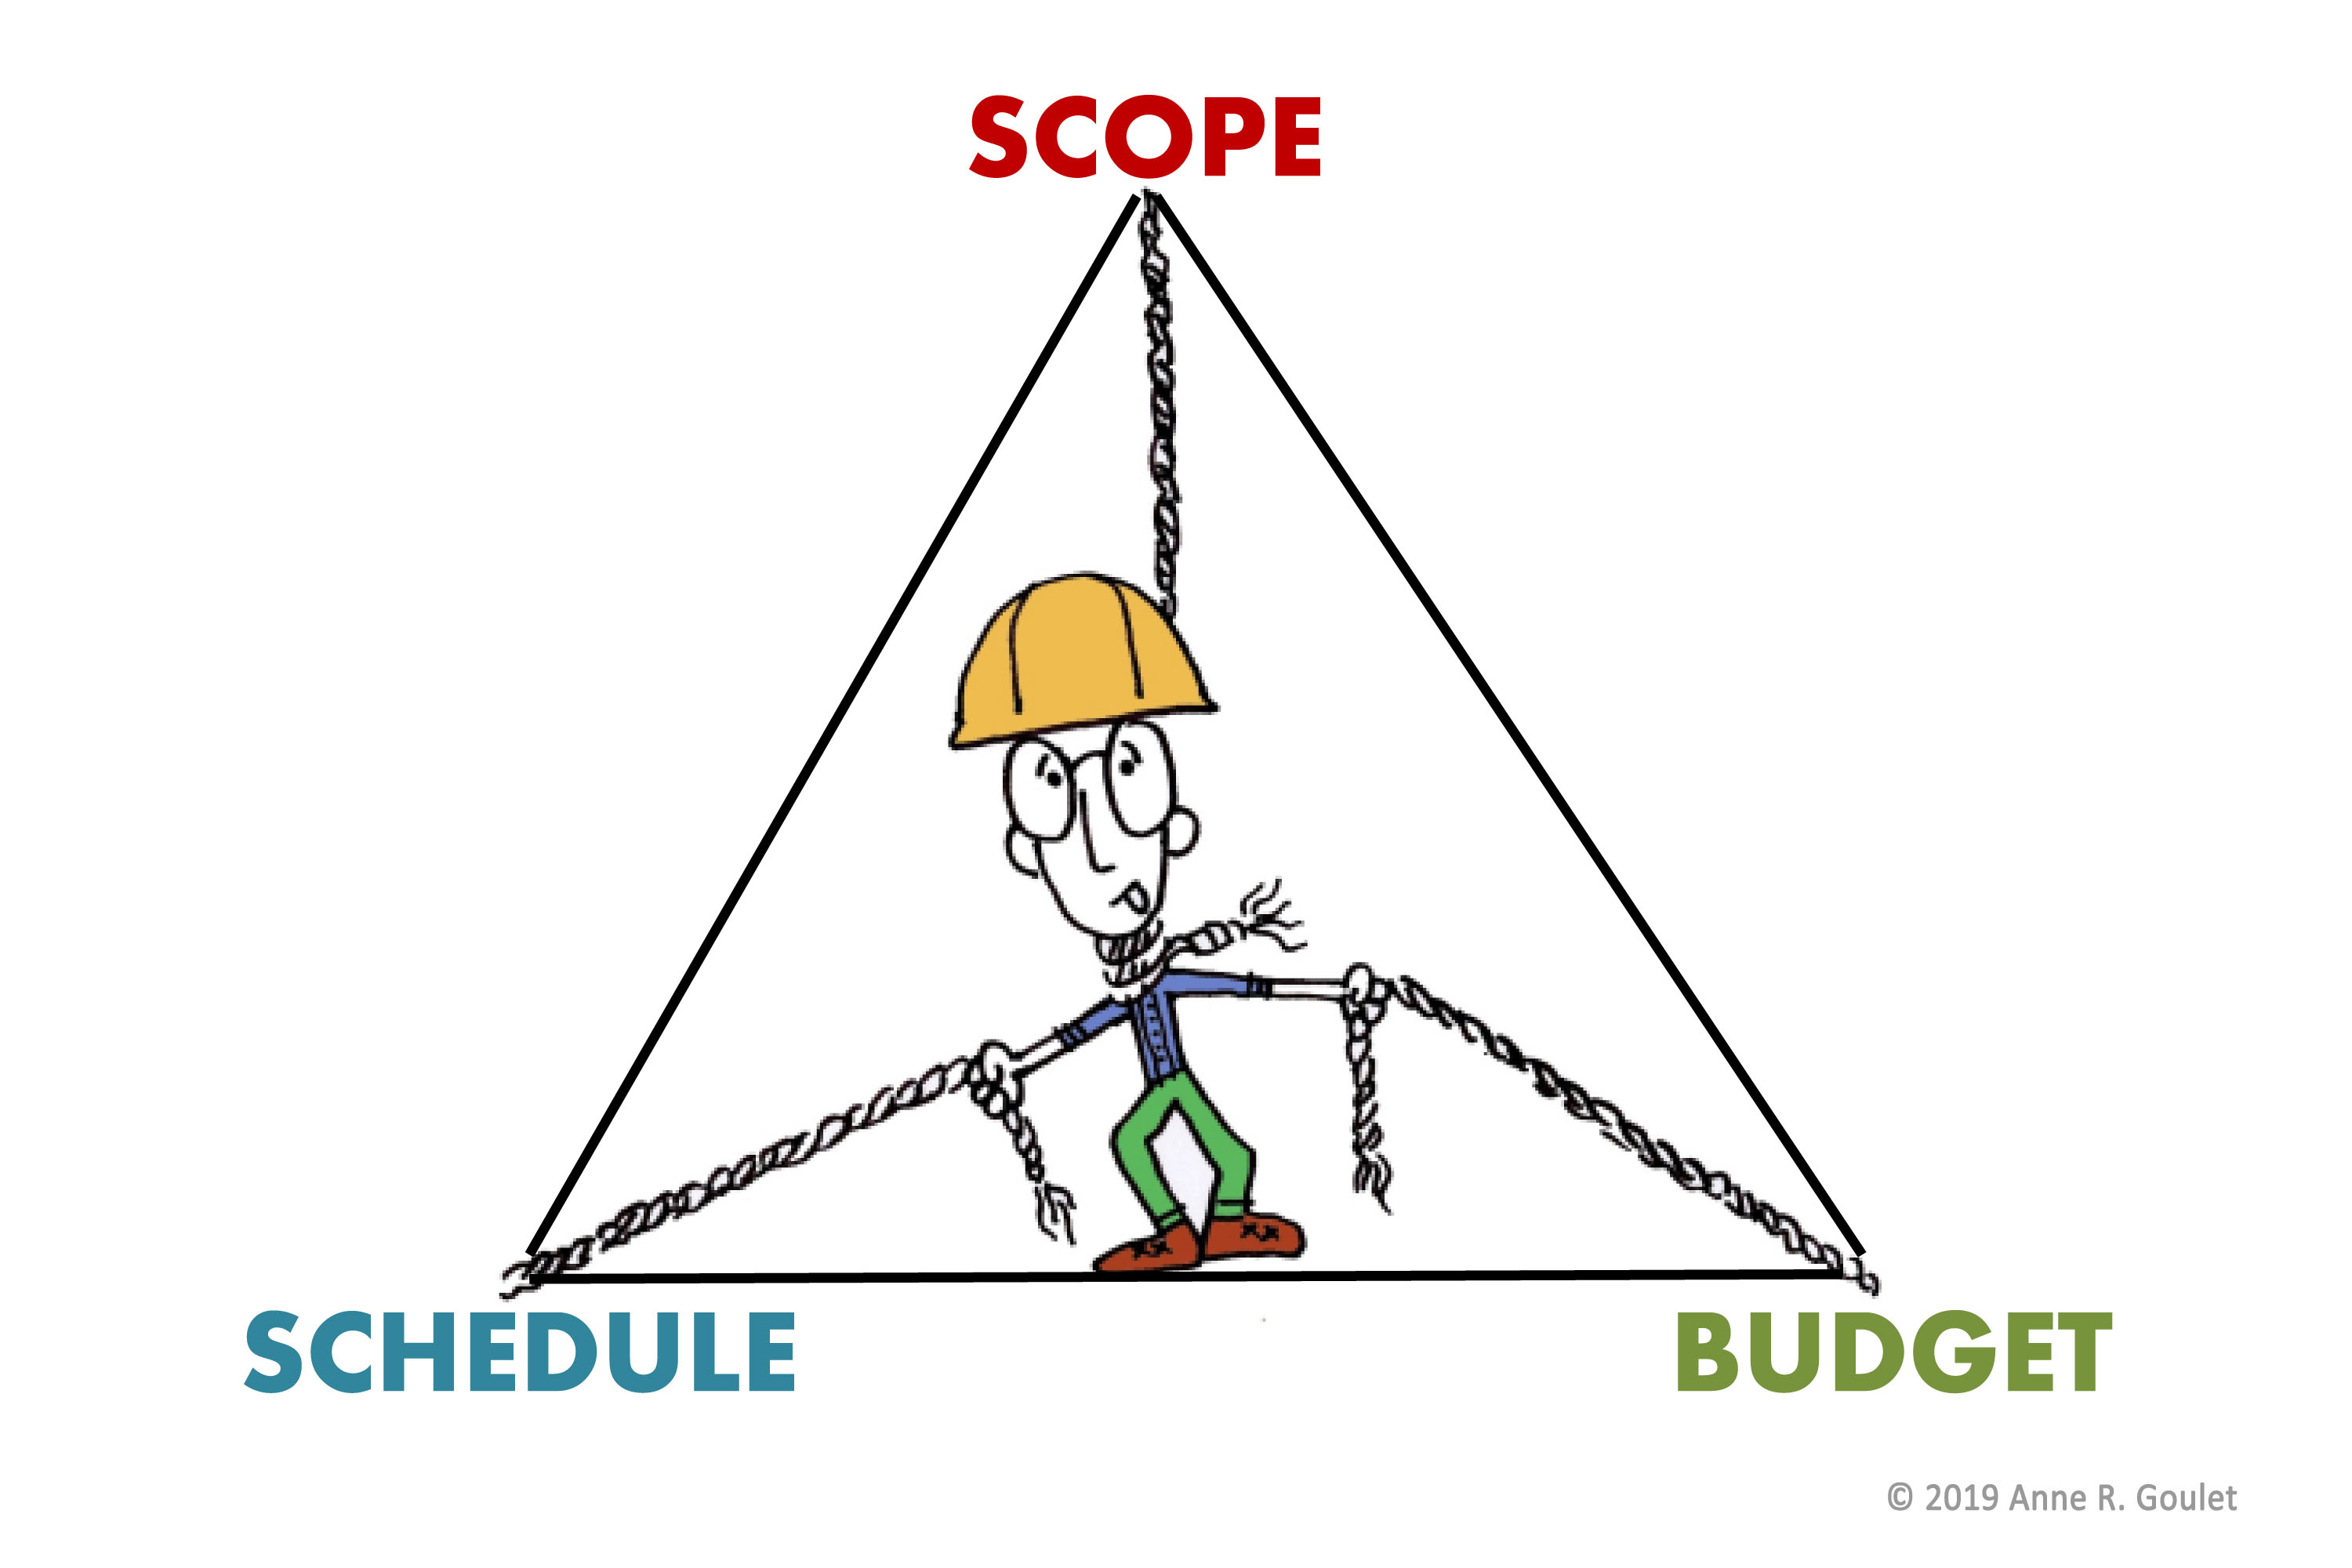 The classic Scope, Schedule, and Budget Triangle: Scope